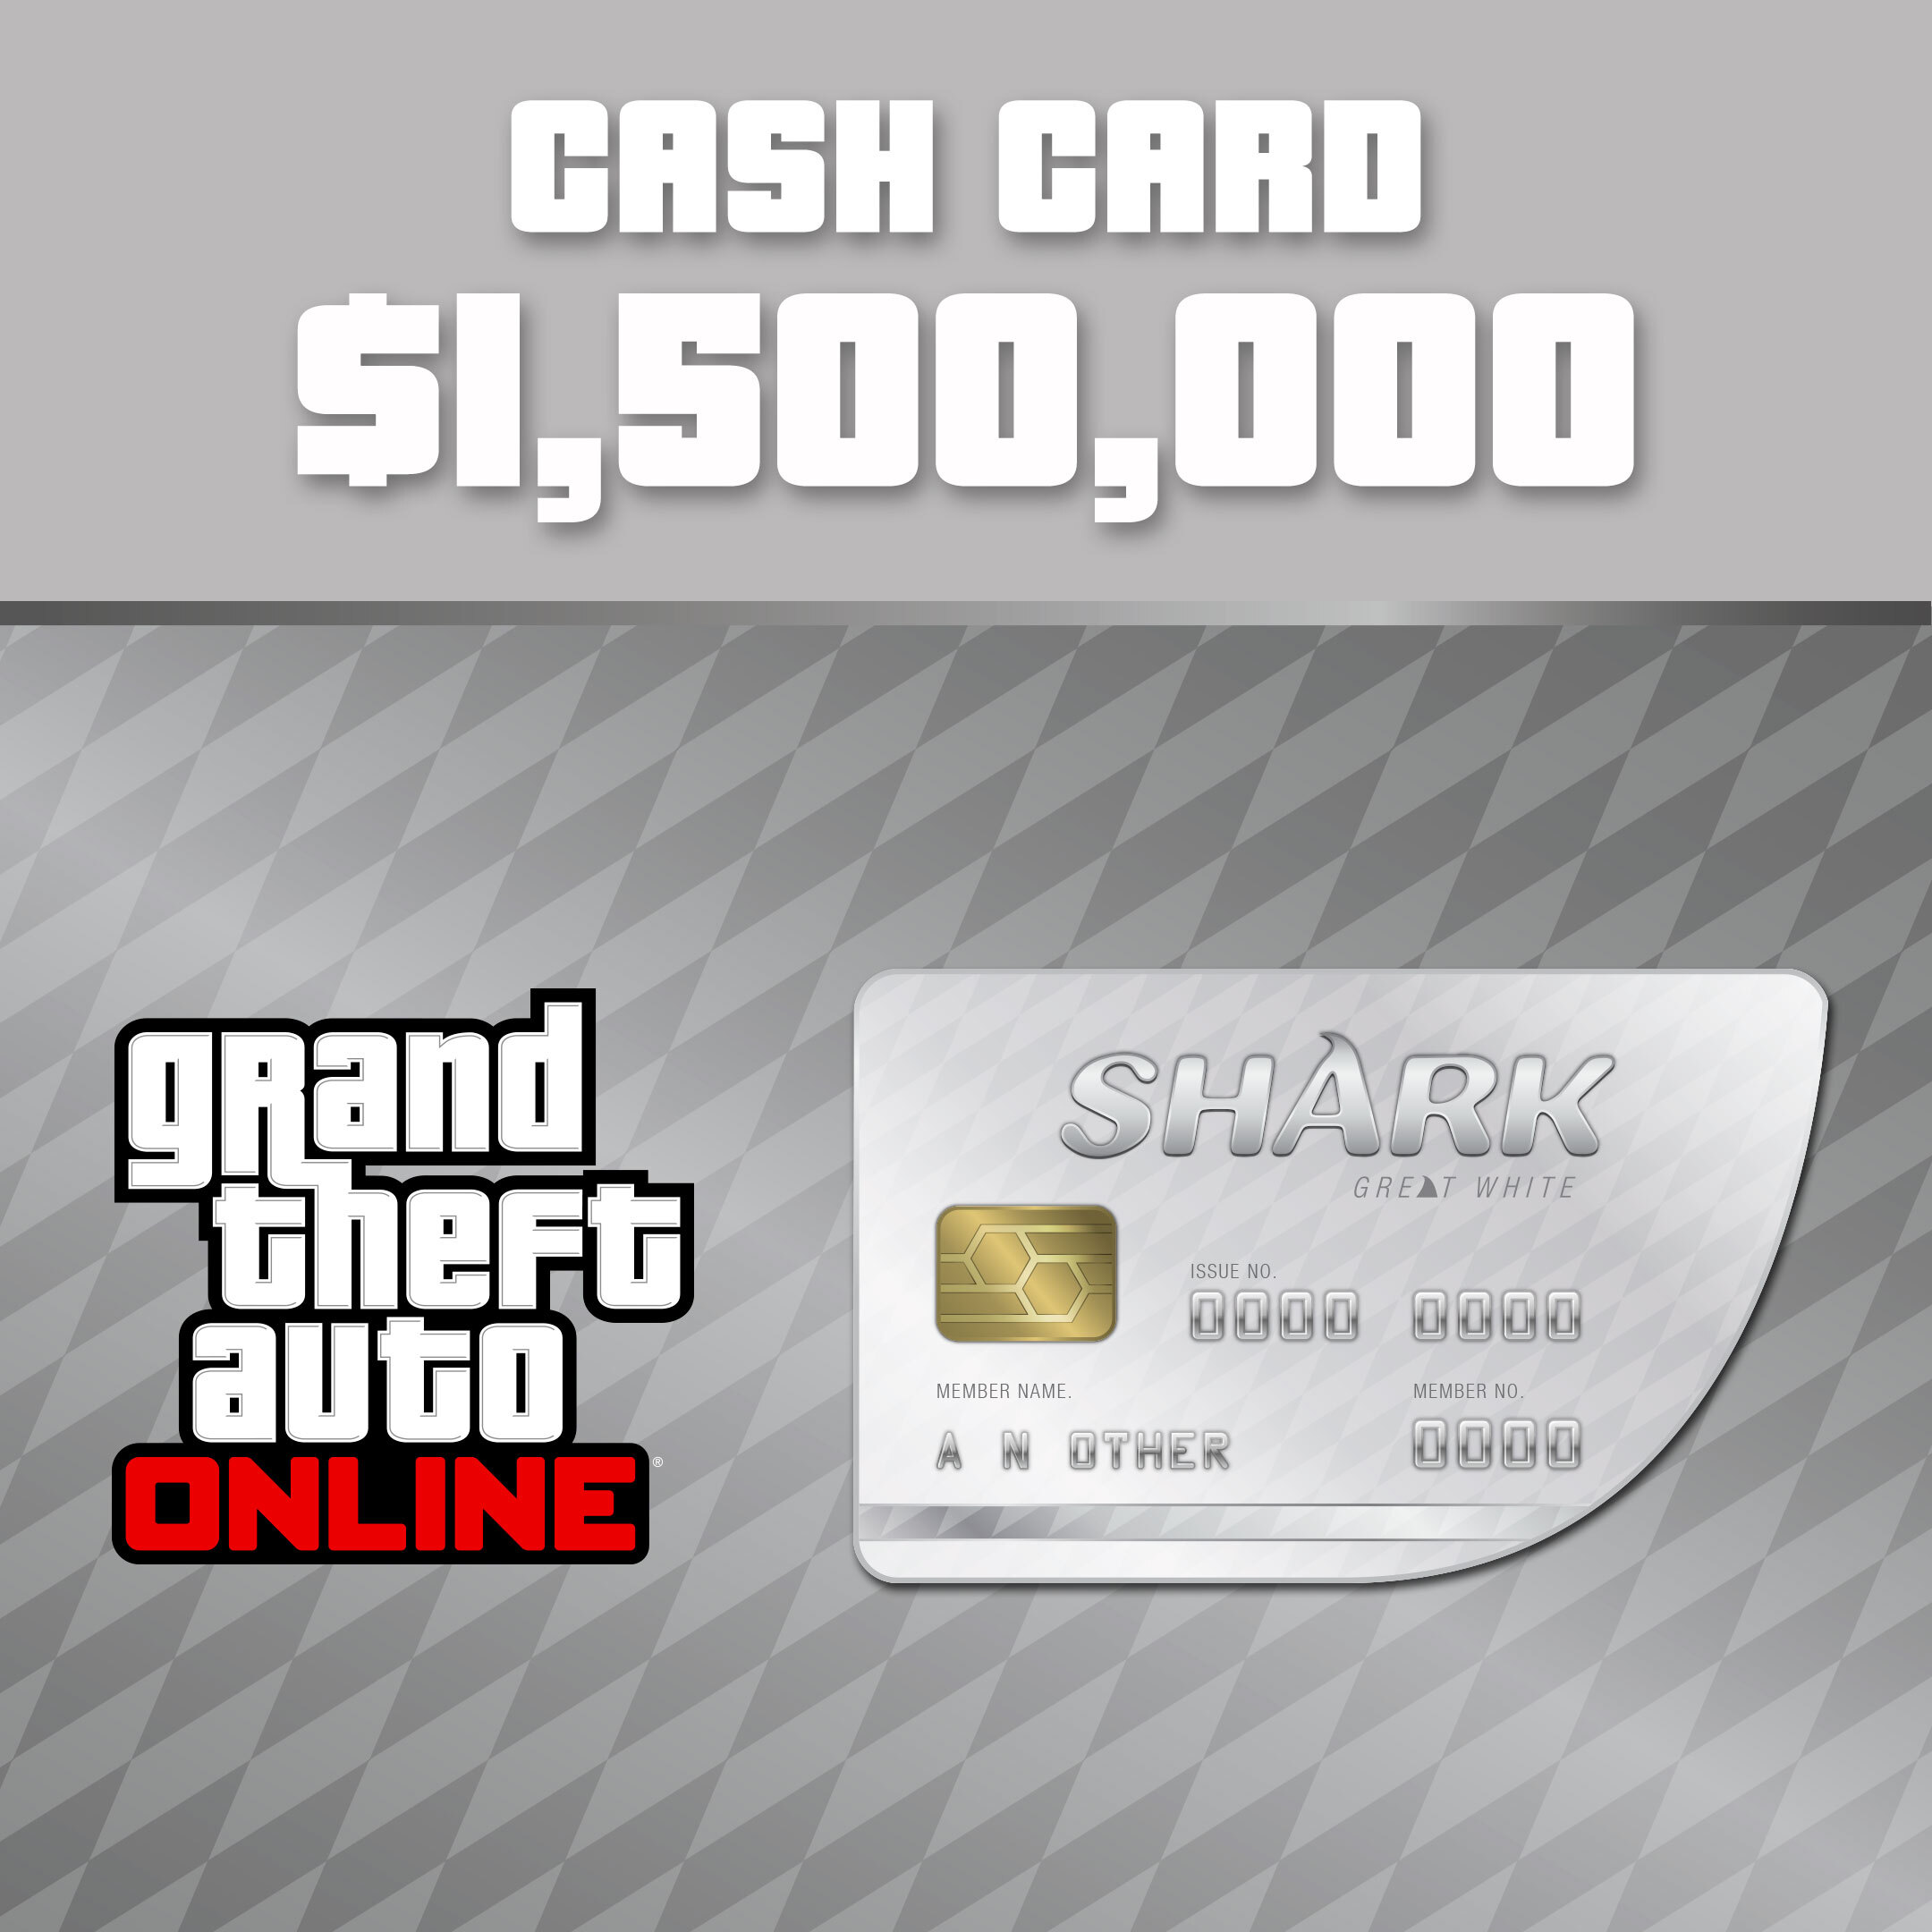  Grand Theft Auto V Playstation 4 : Take 2 Interactive